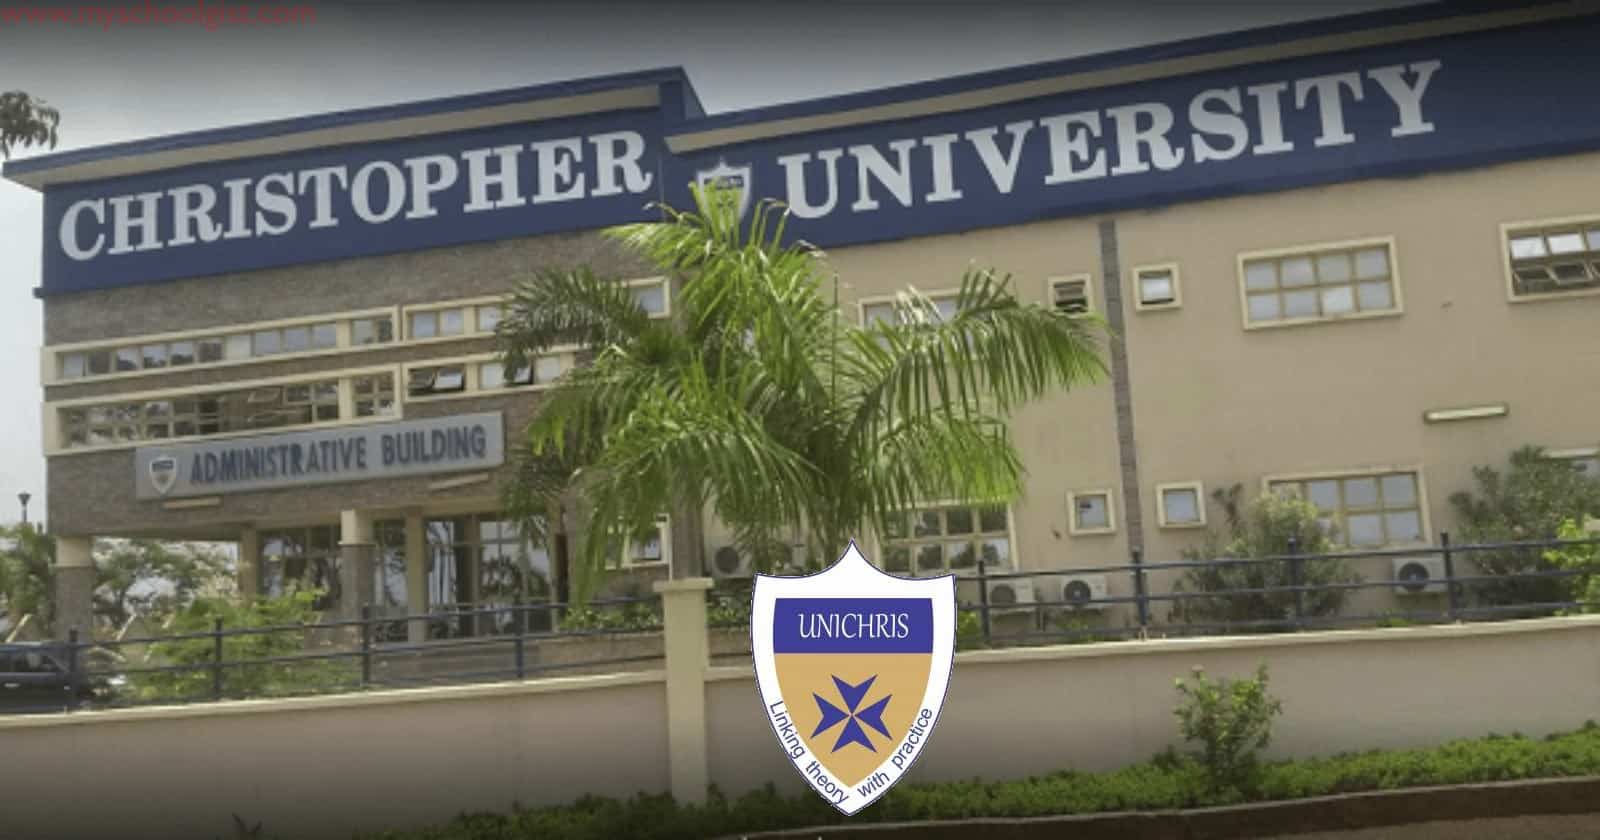 2022/2023 Christopher University tuition (UNICHRIS)